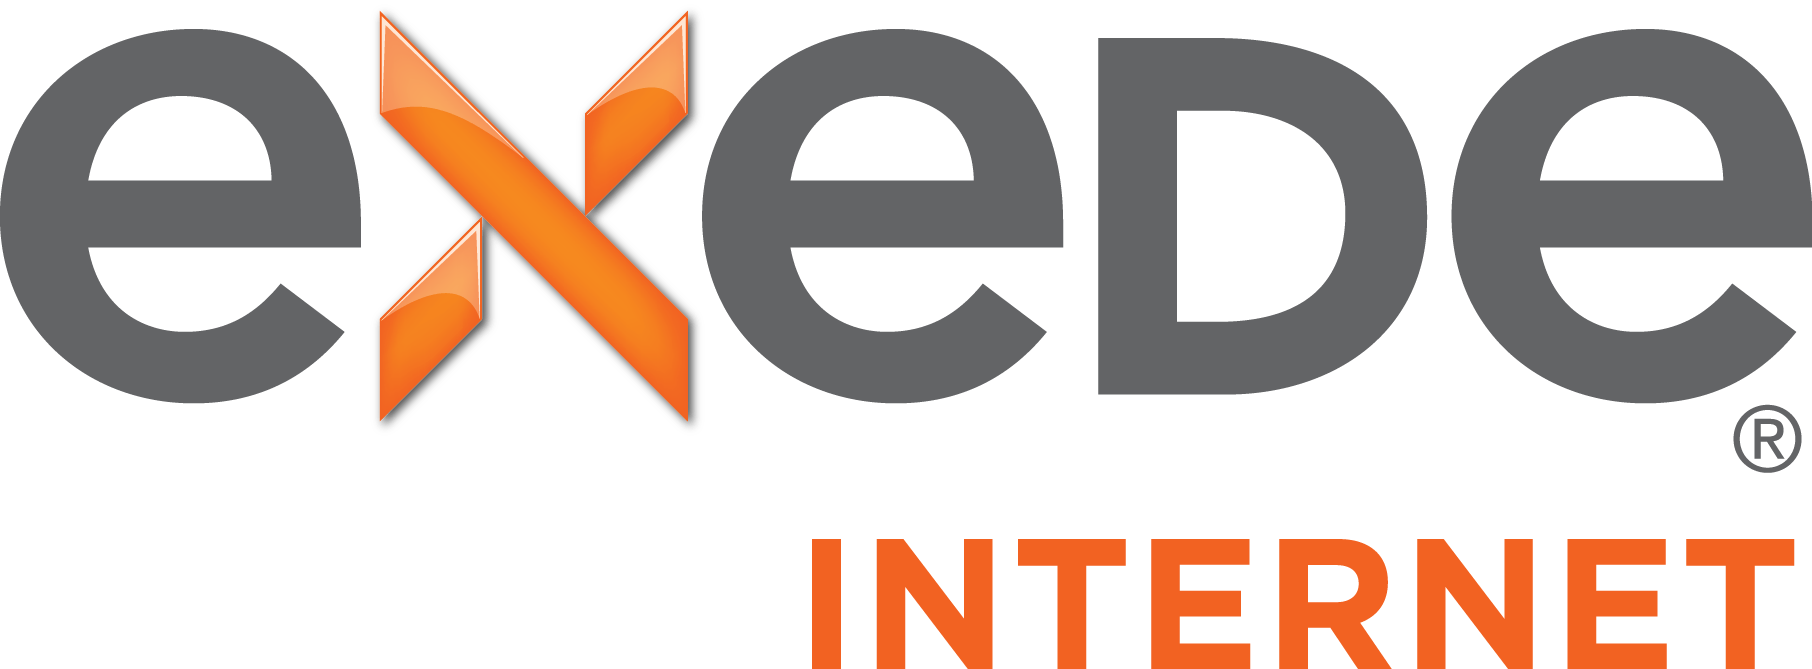 Ex Logo - File:Ex Internet Logo main-3d-LG.png - Wikimedia Commons